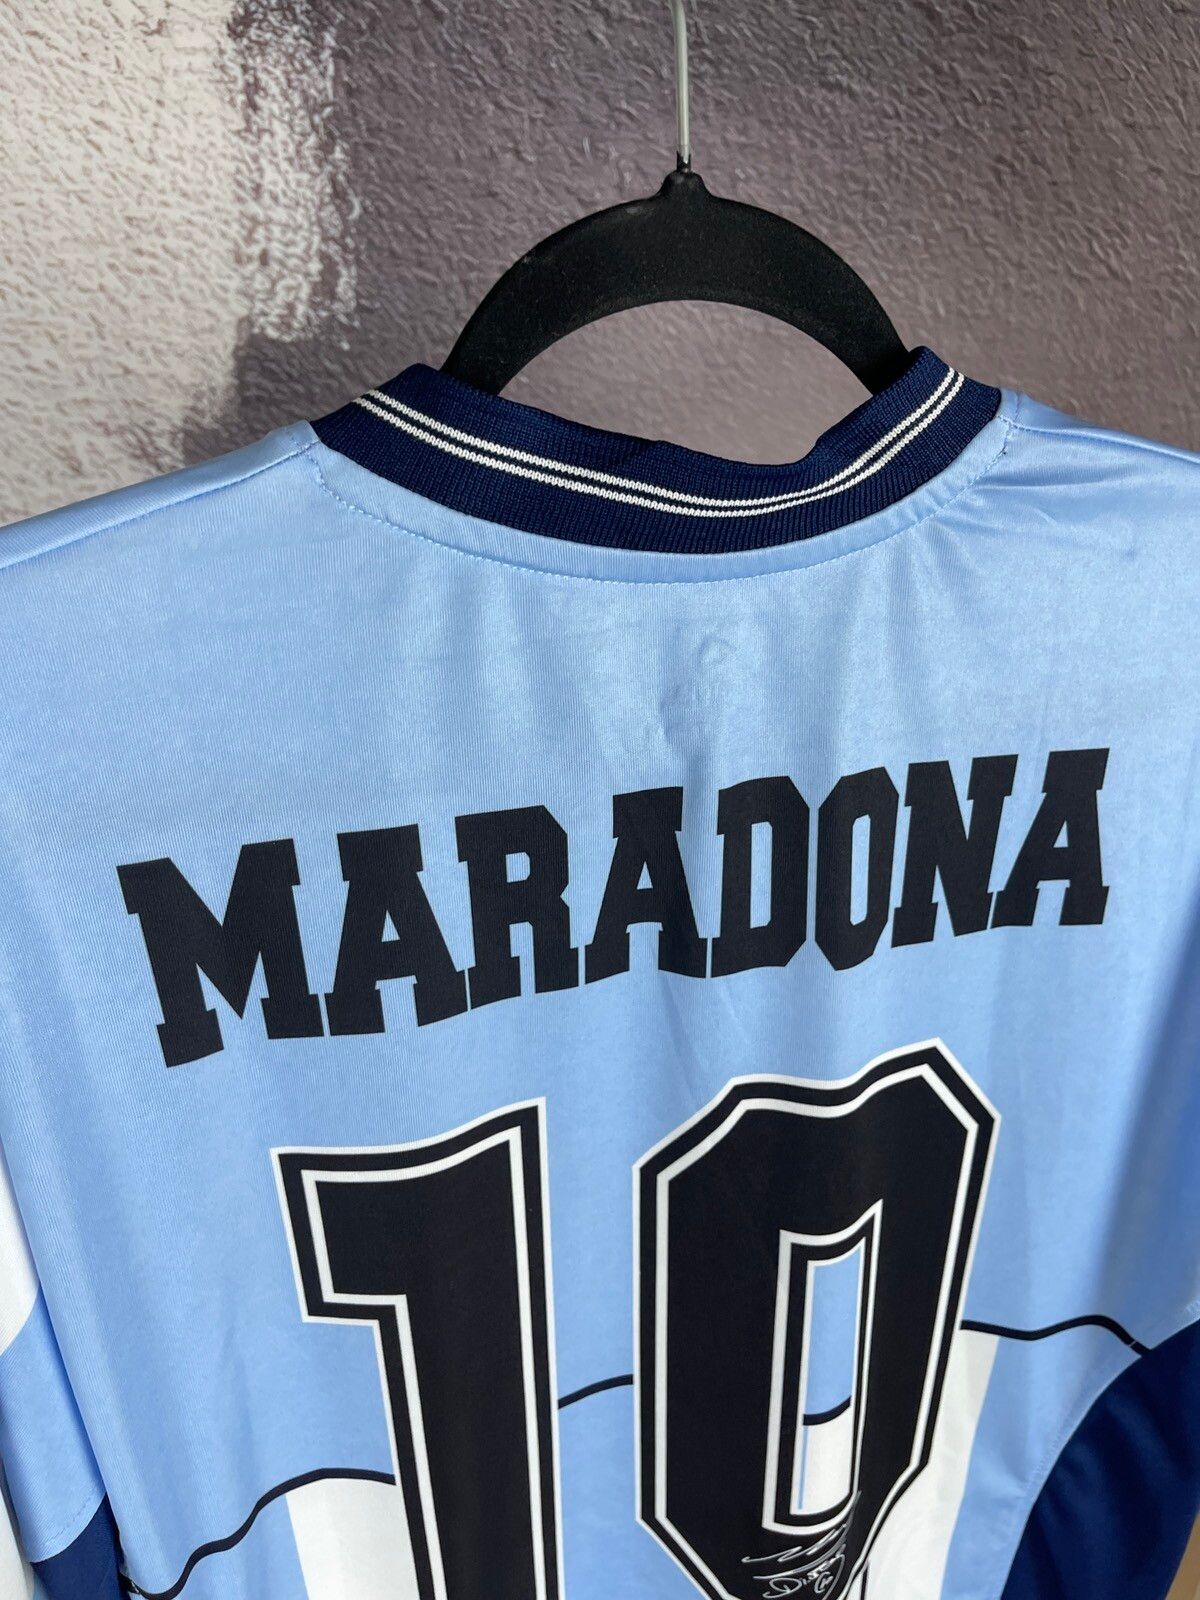 Soccer Jersey Limited Edition Jersey Argentina Maradona football soccer Size US M / EU 48-50 / 2 - 15 Thumbnail